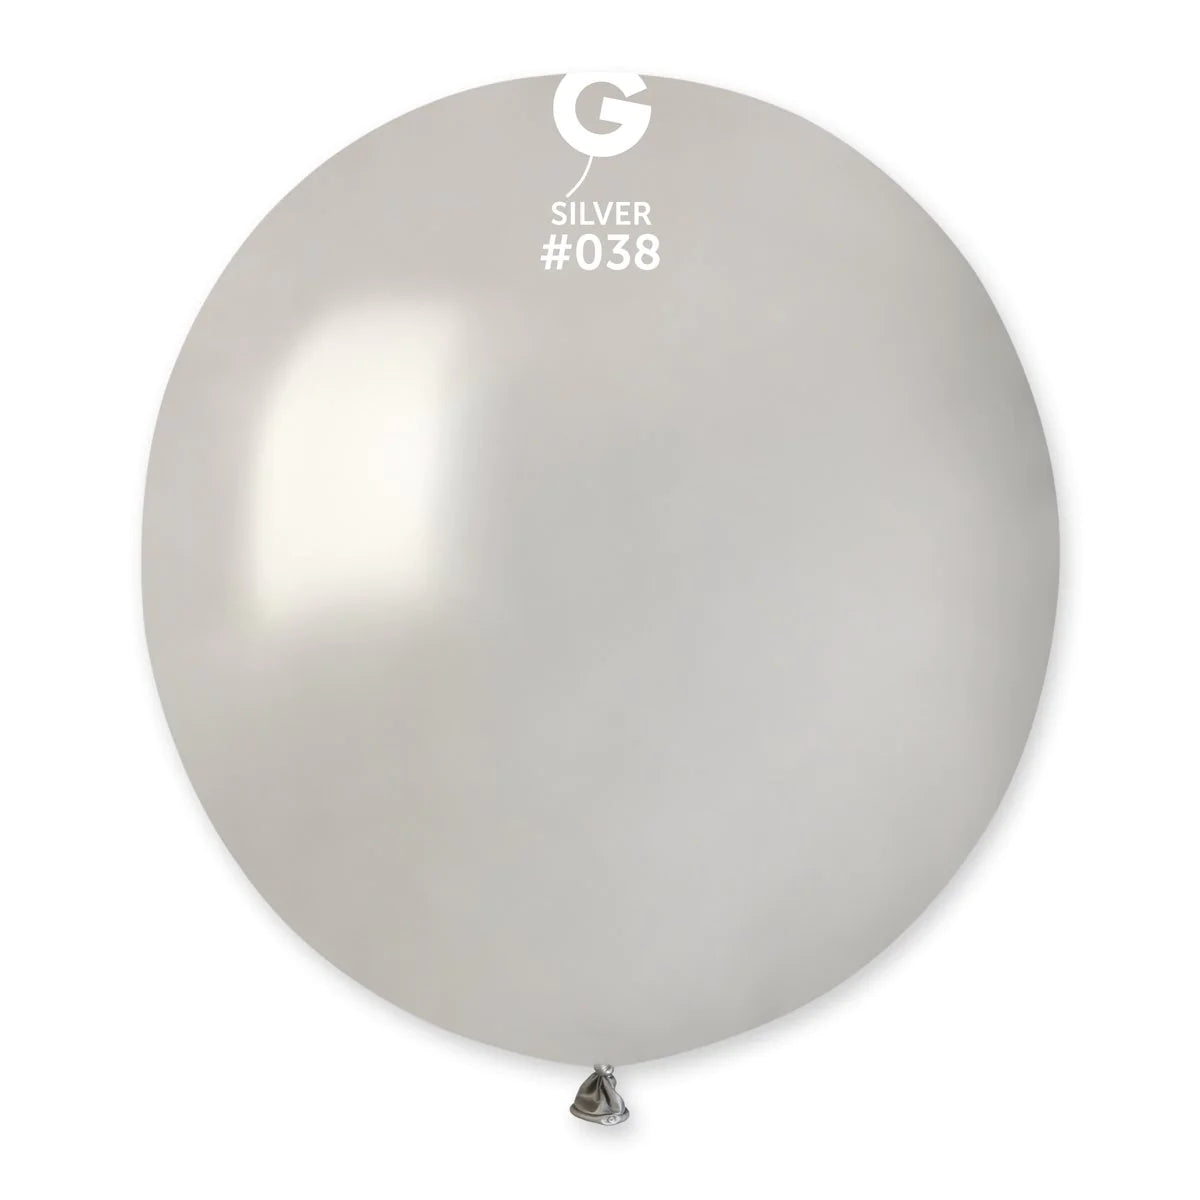 Metallic Balloon Silver #038 size 5" 12" 19" 31"